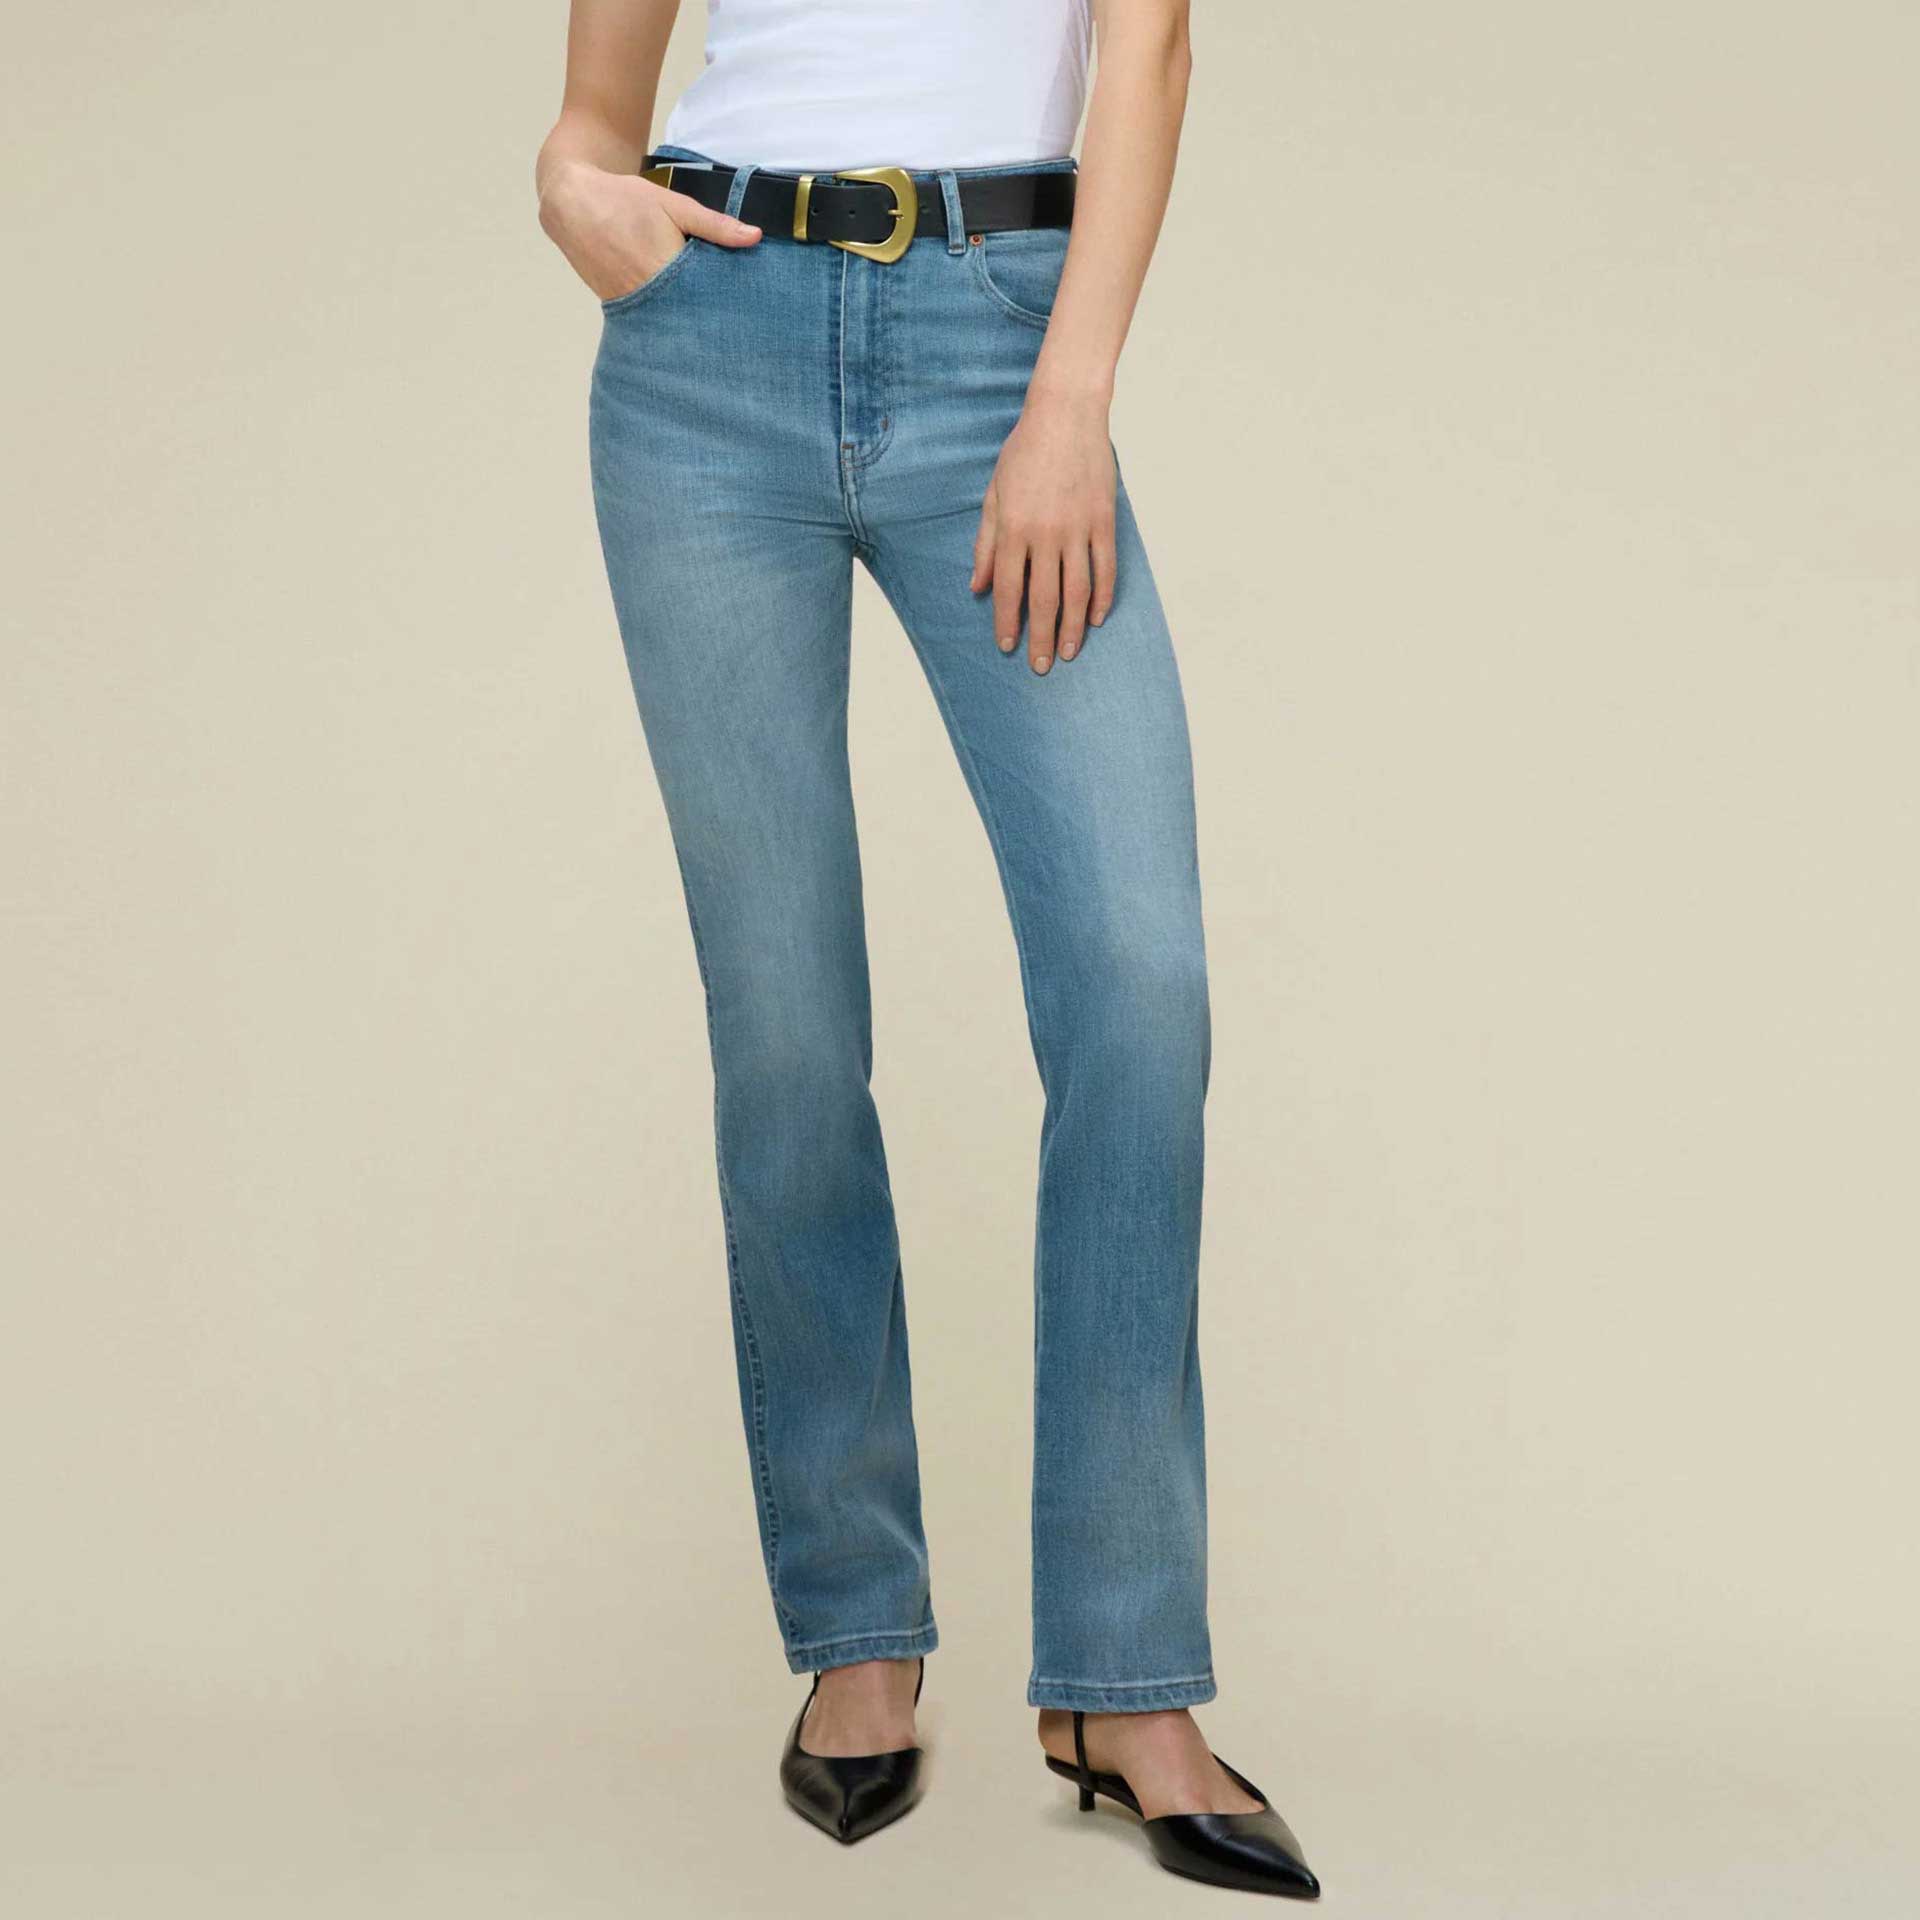 Lois jeans Jeans Malena